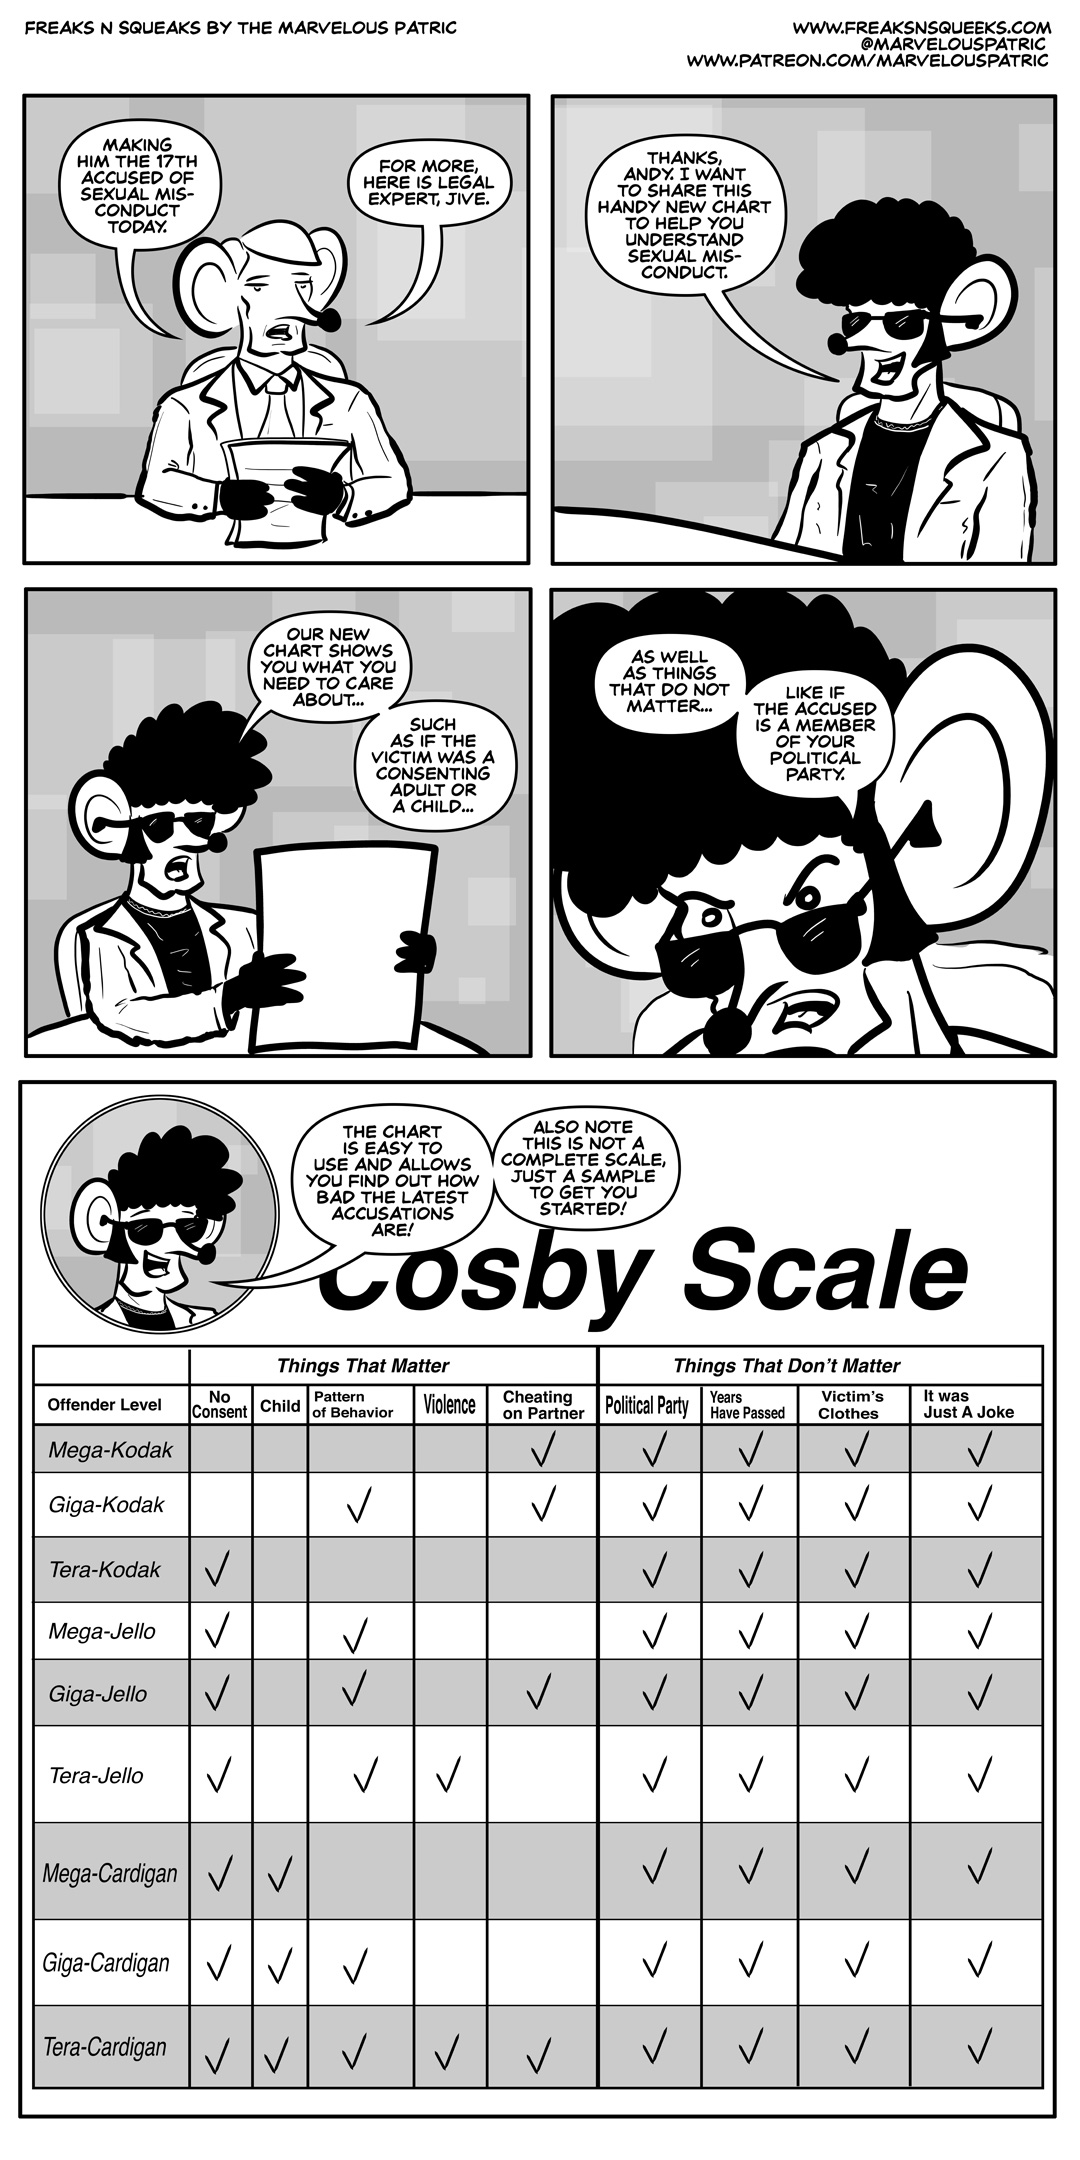 Freaks N Squeaks #2065 – The Cosby Scale